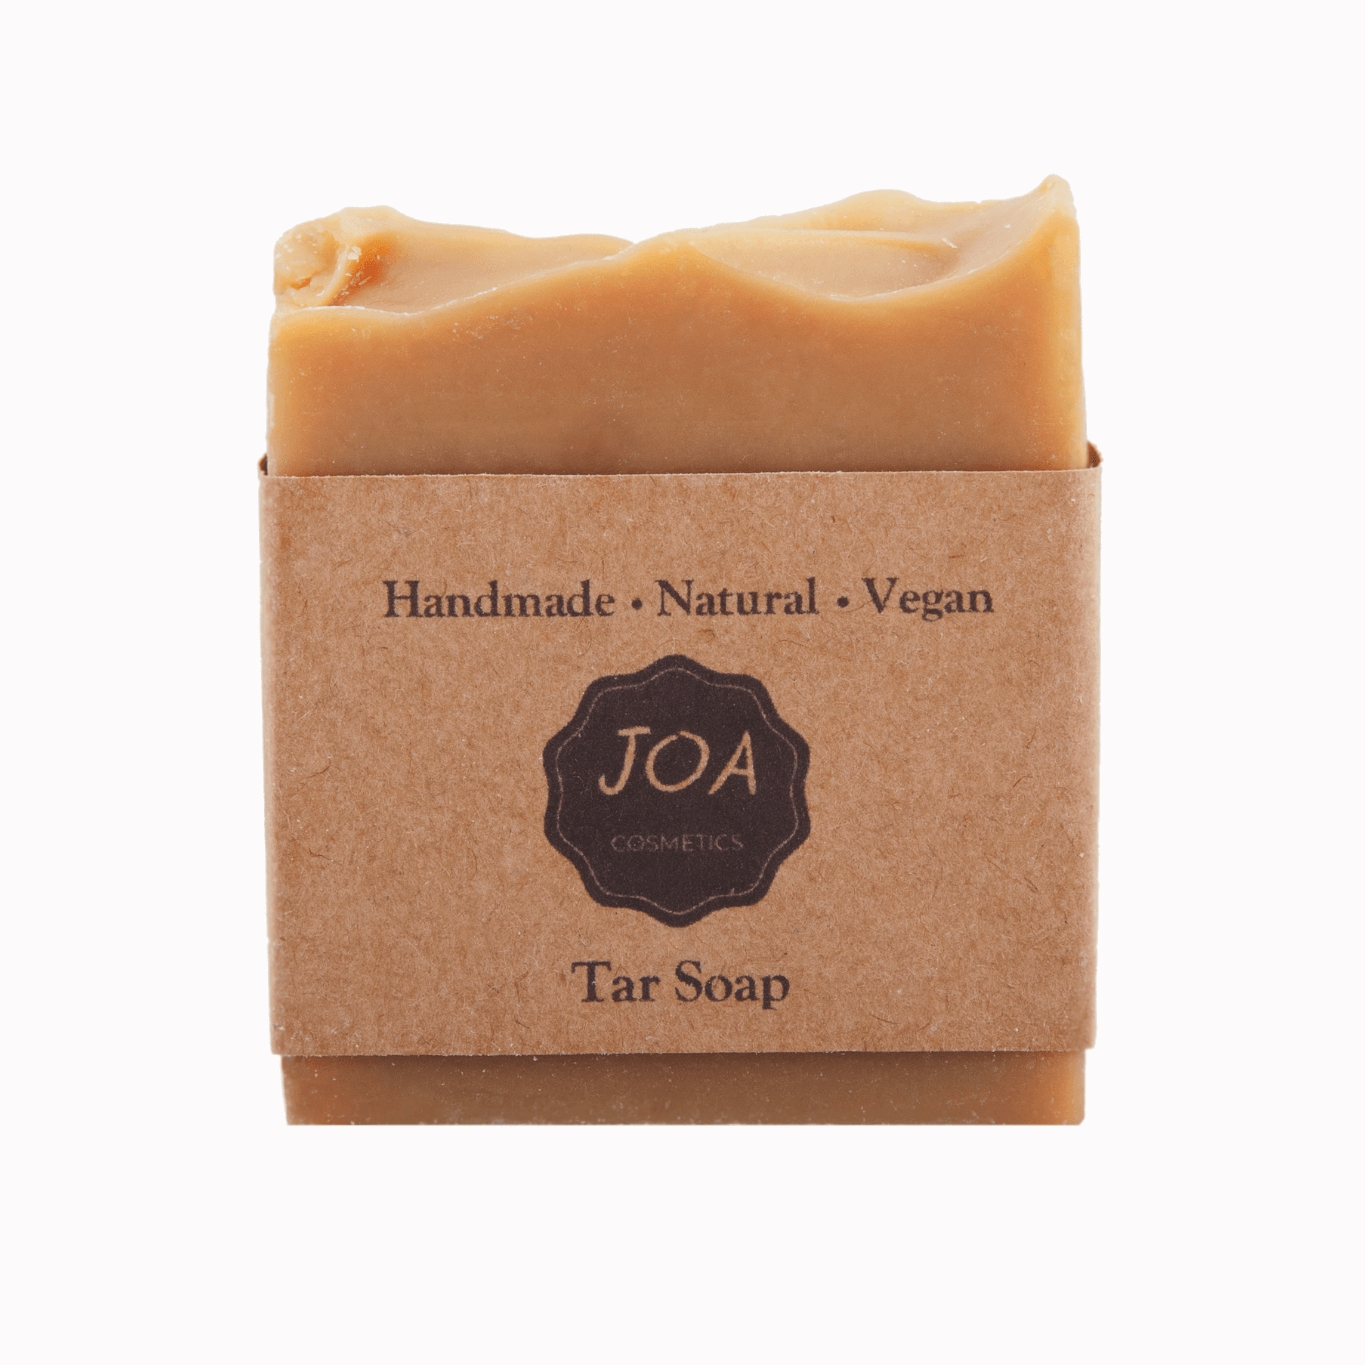 100% Natural - Handmade. Vegan - Palm Oil Free. Contains juniper tar oil. The best handmade soap.